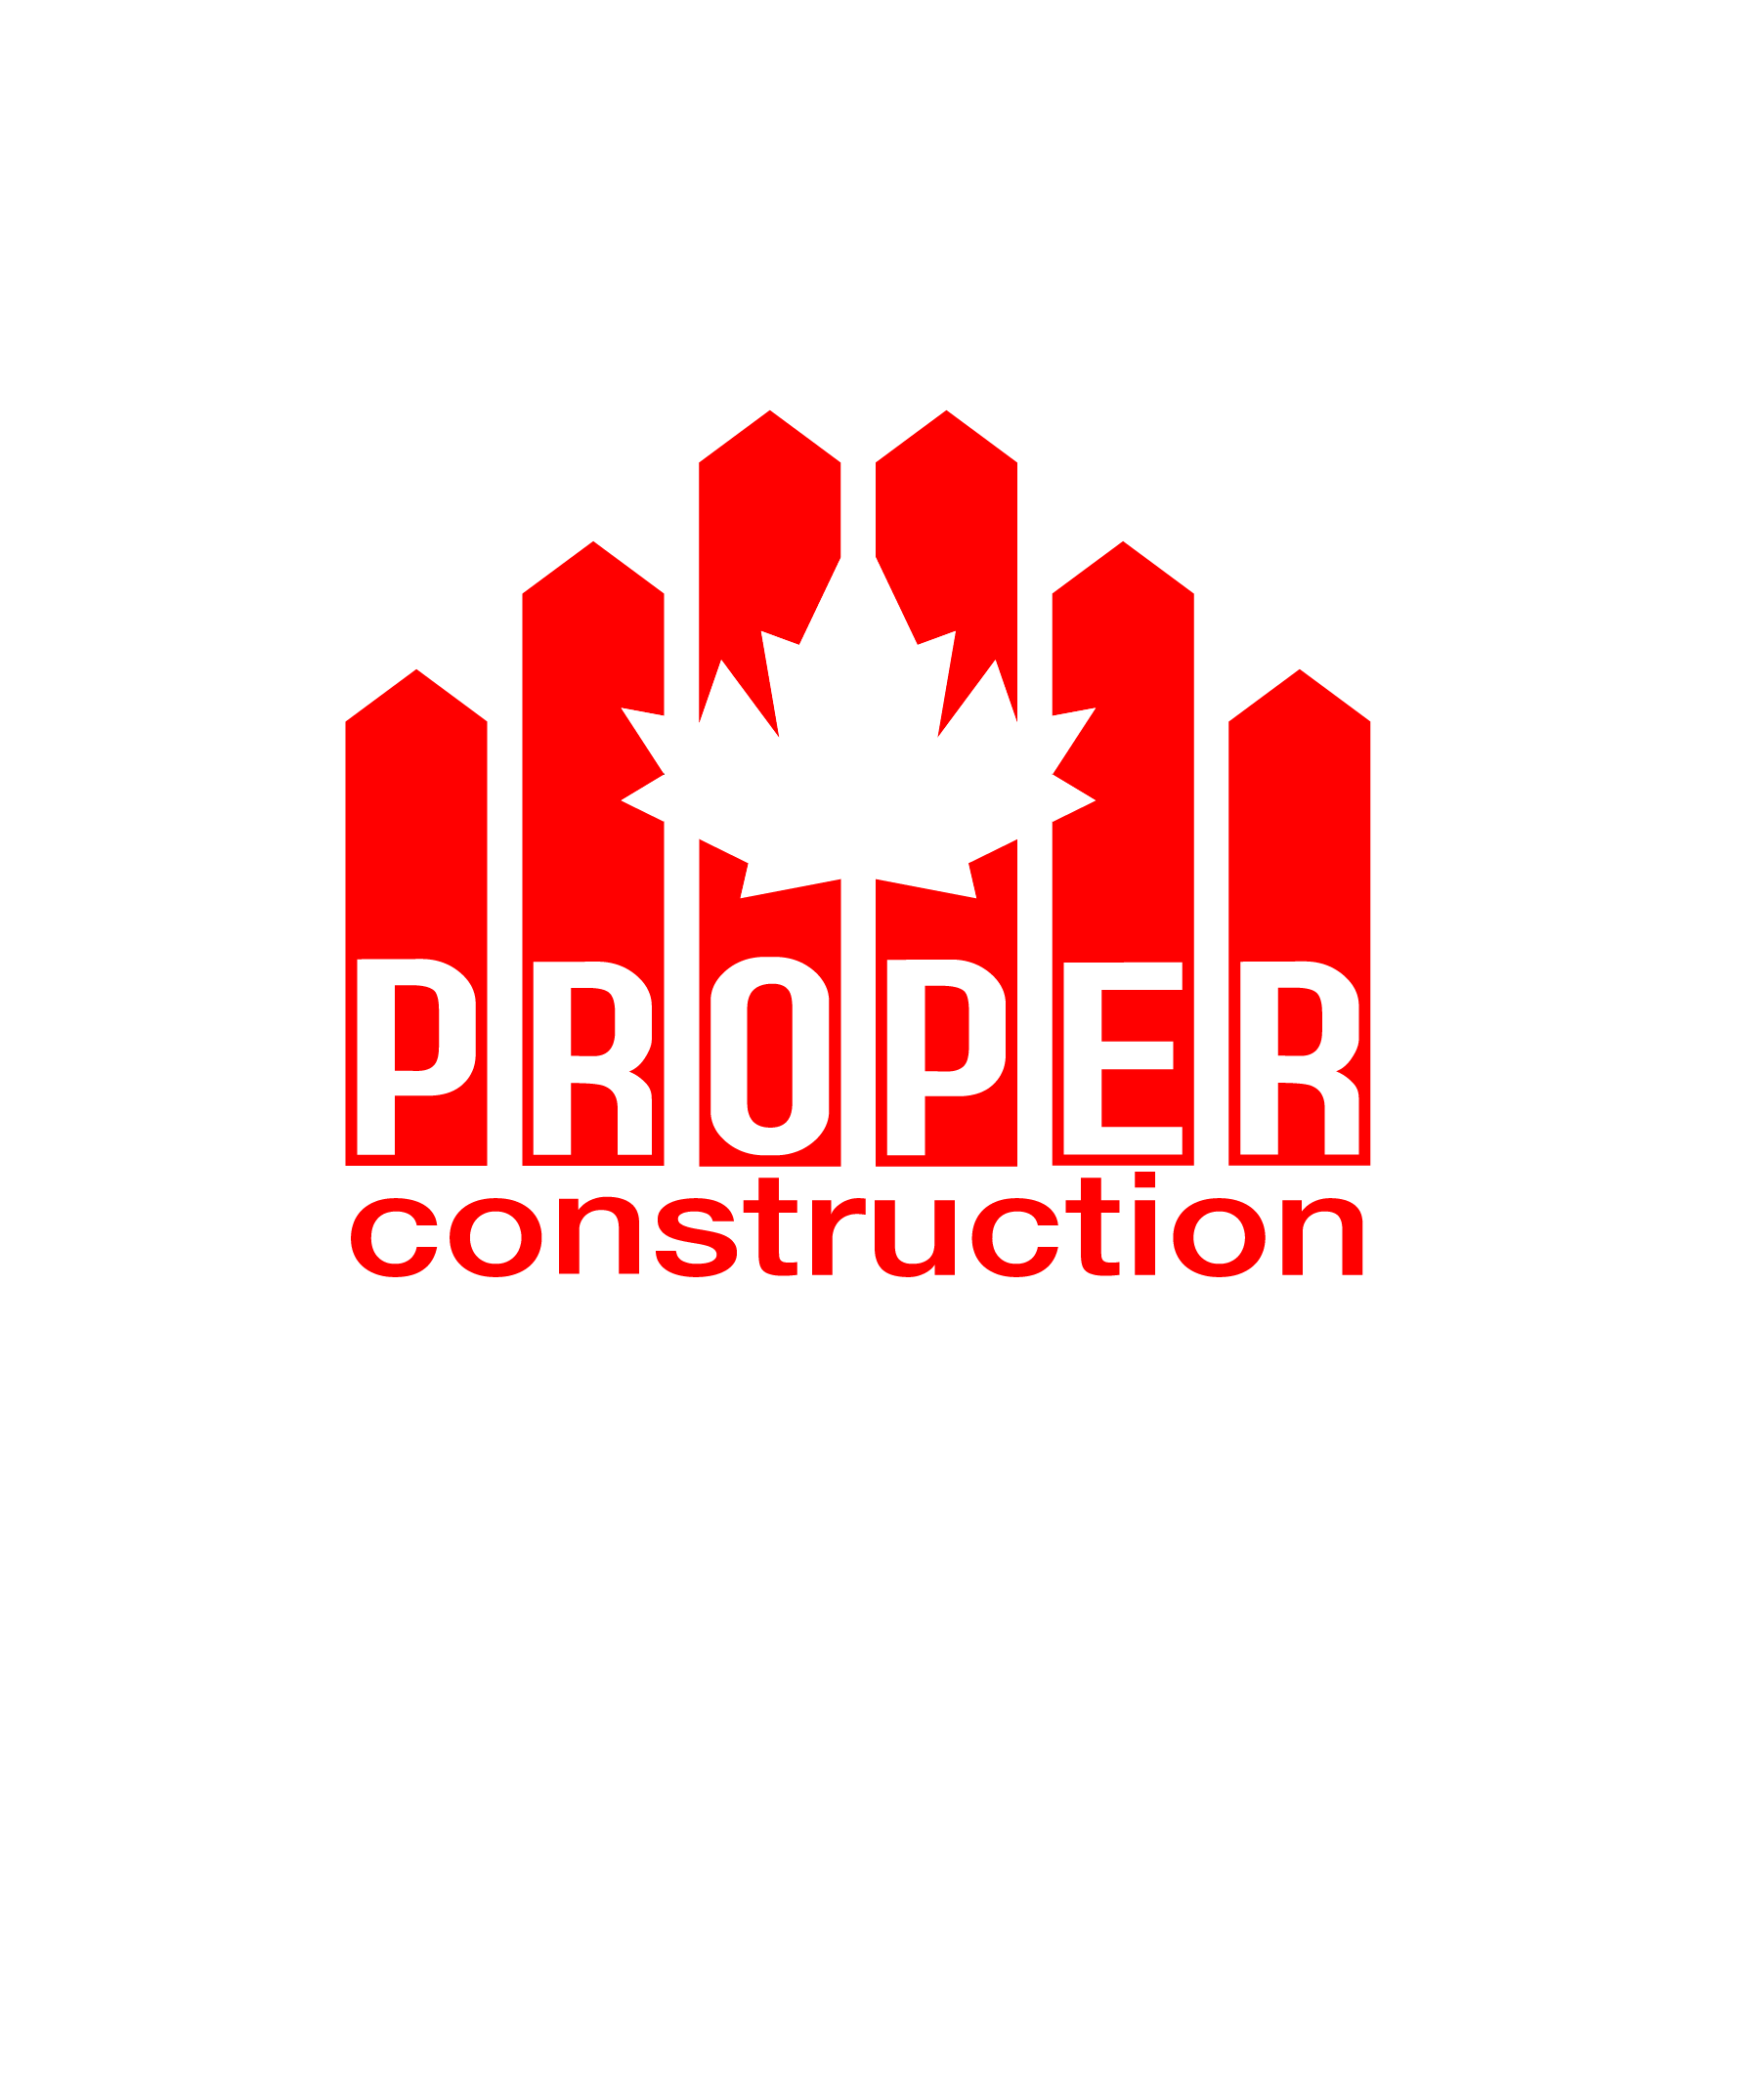 Proper Construction's logo